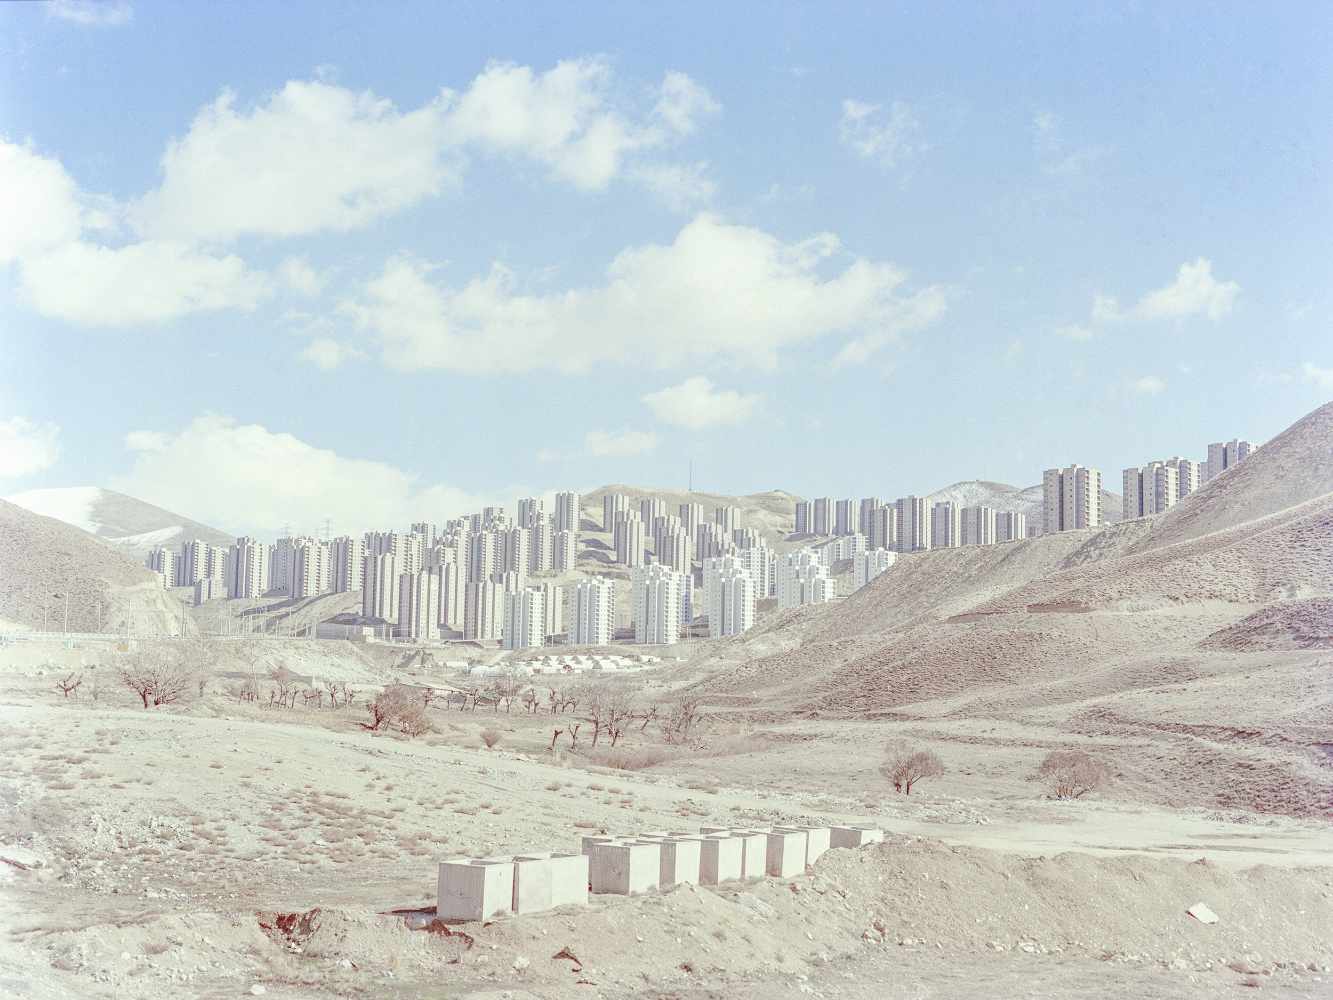 Photograph showing identical white high-rise buildings studding a desert landscape beneath a blue sky.